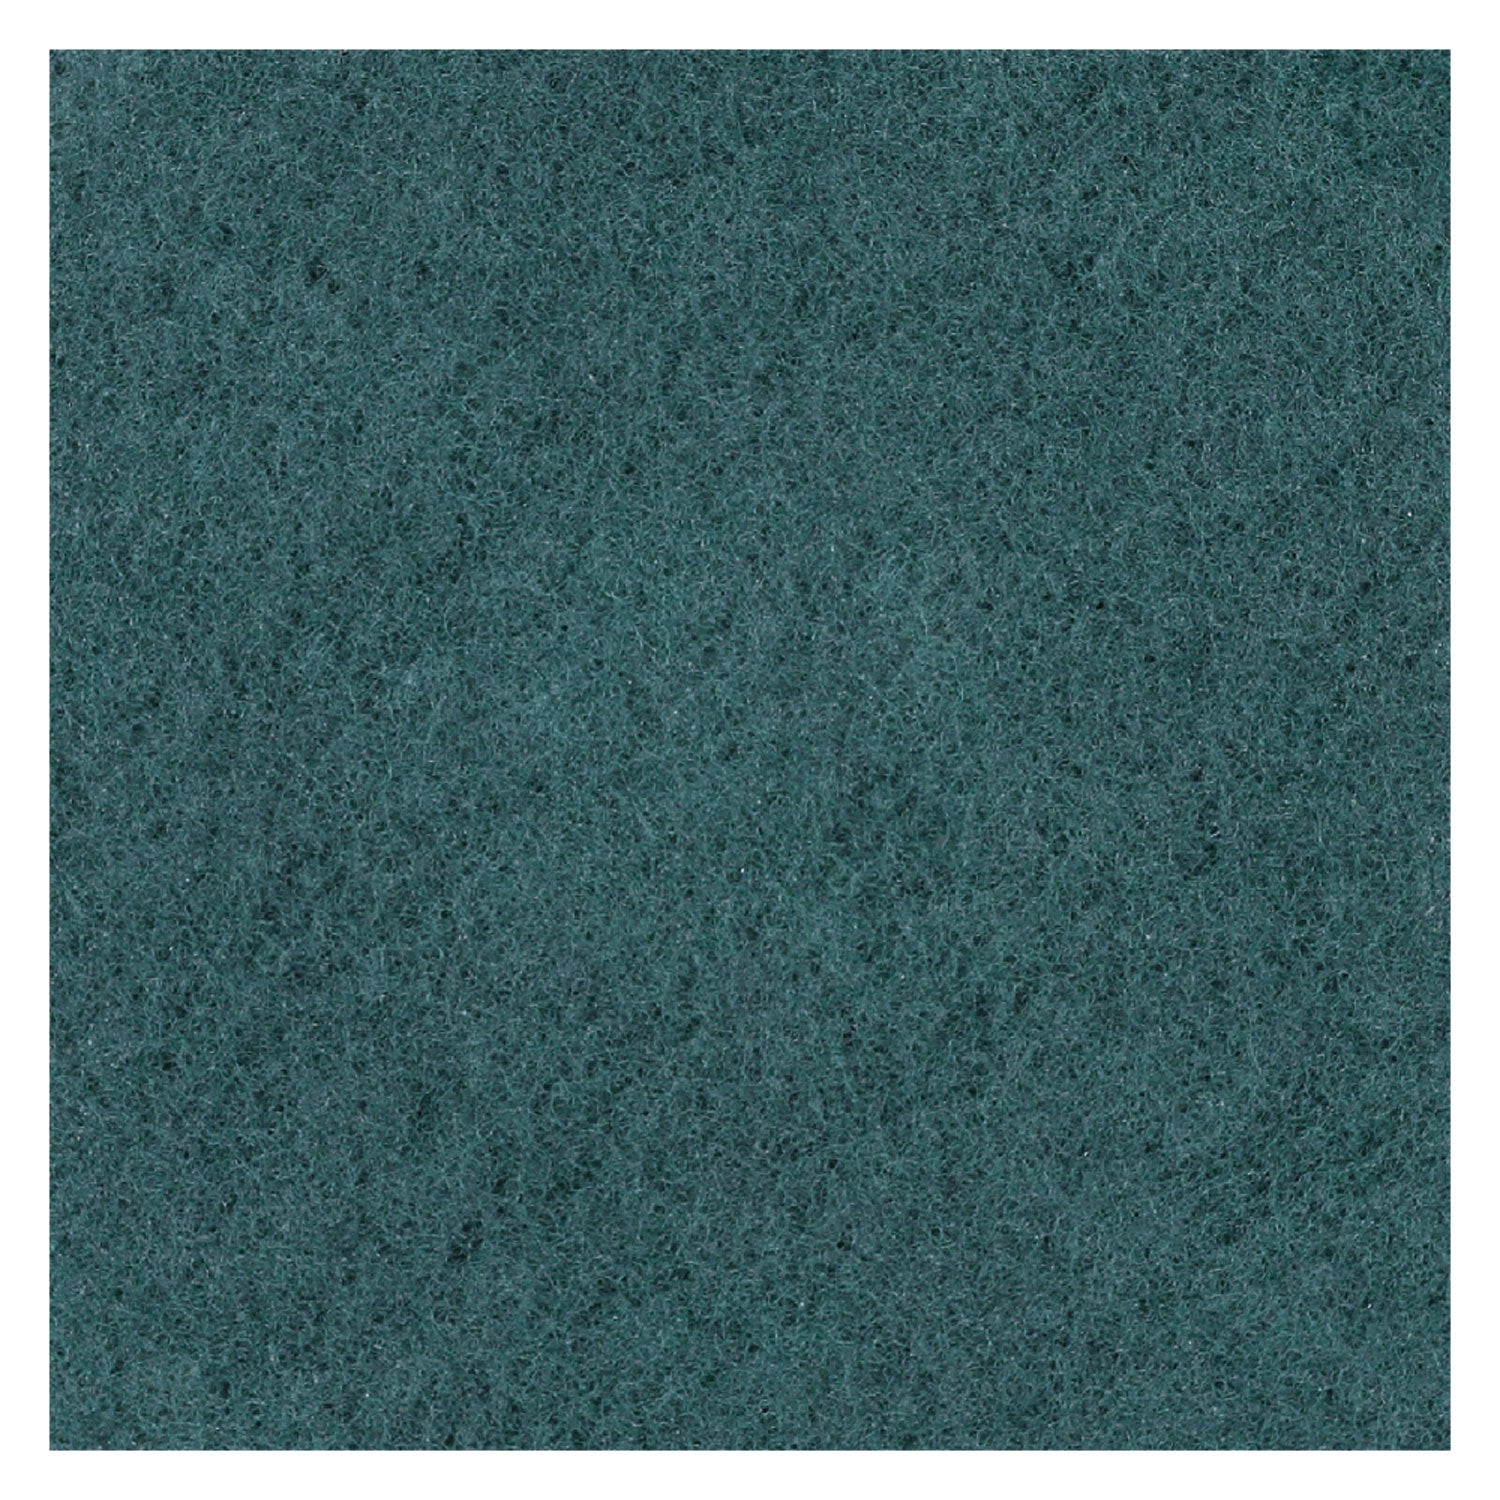 Heavy-Duty Scrubbing Floor Pads, 13" Diameter, Green, 5/Carton - 6